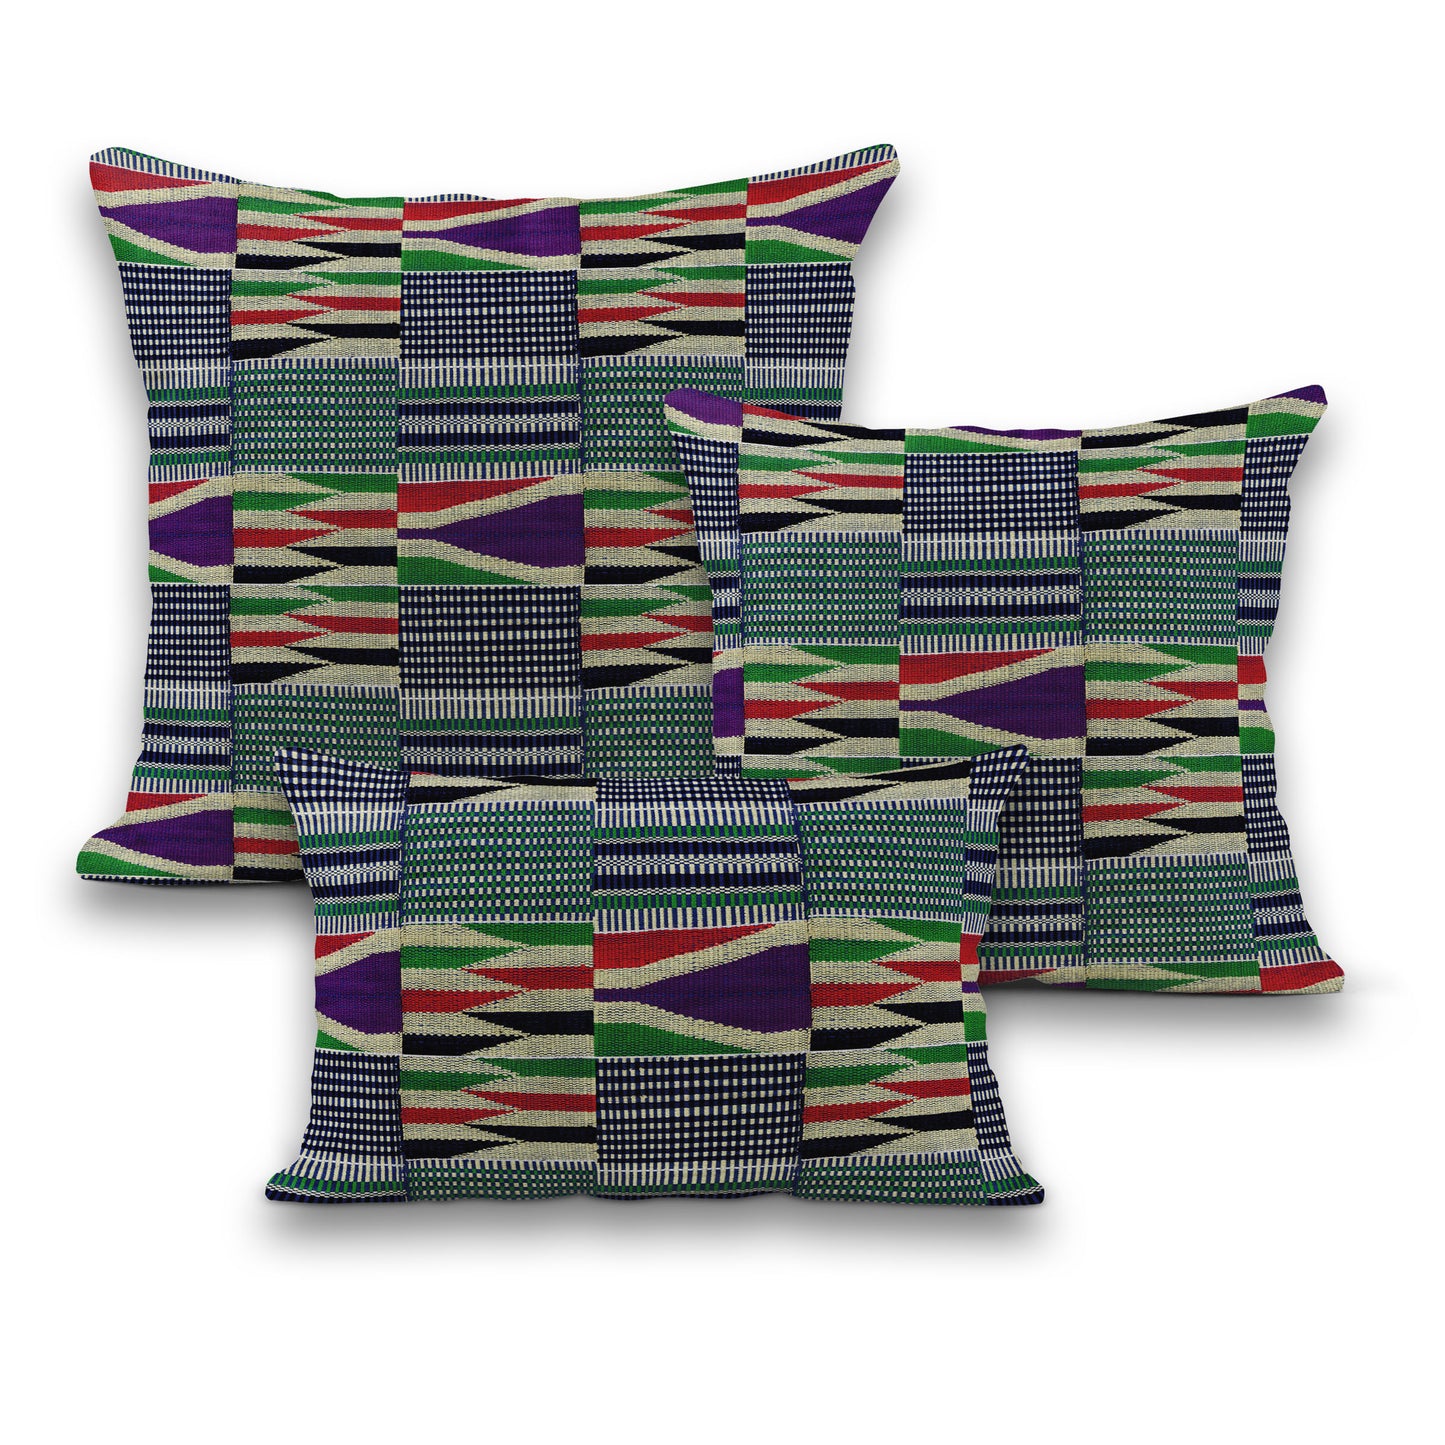 AnitaveeTextile African Throw Pillows in Tribal Kente Cloth Print - 3 Sizes